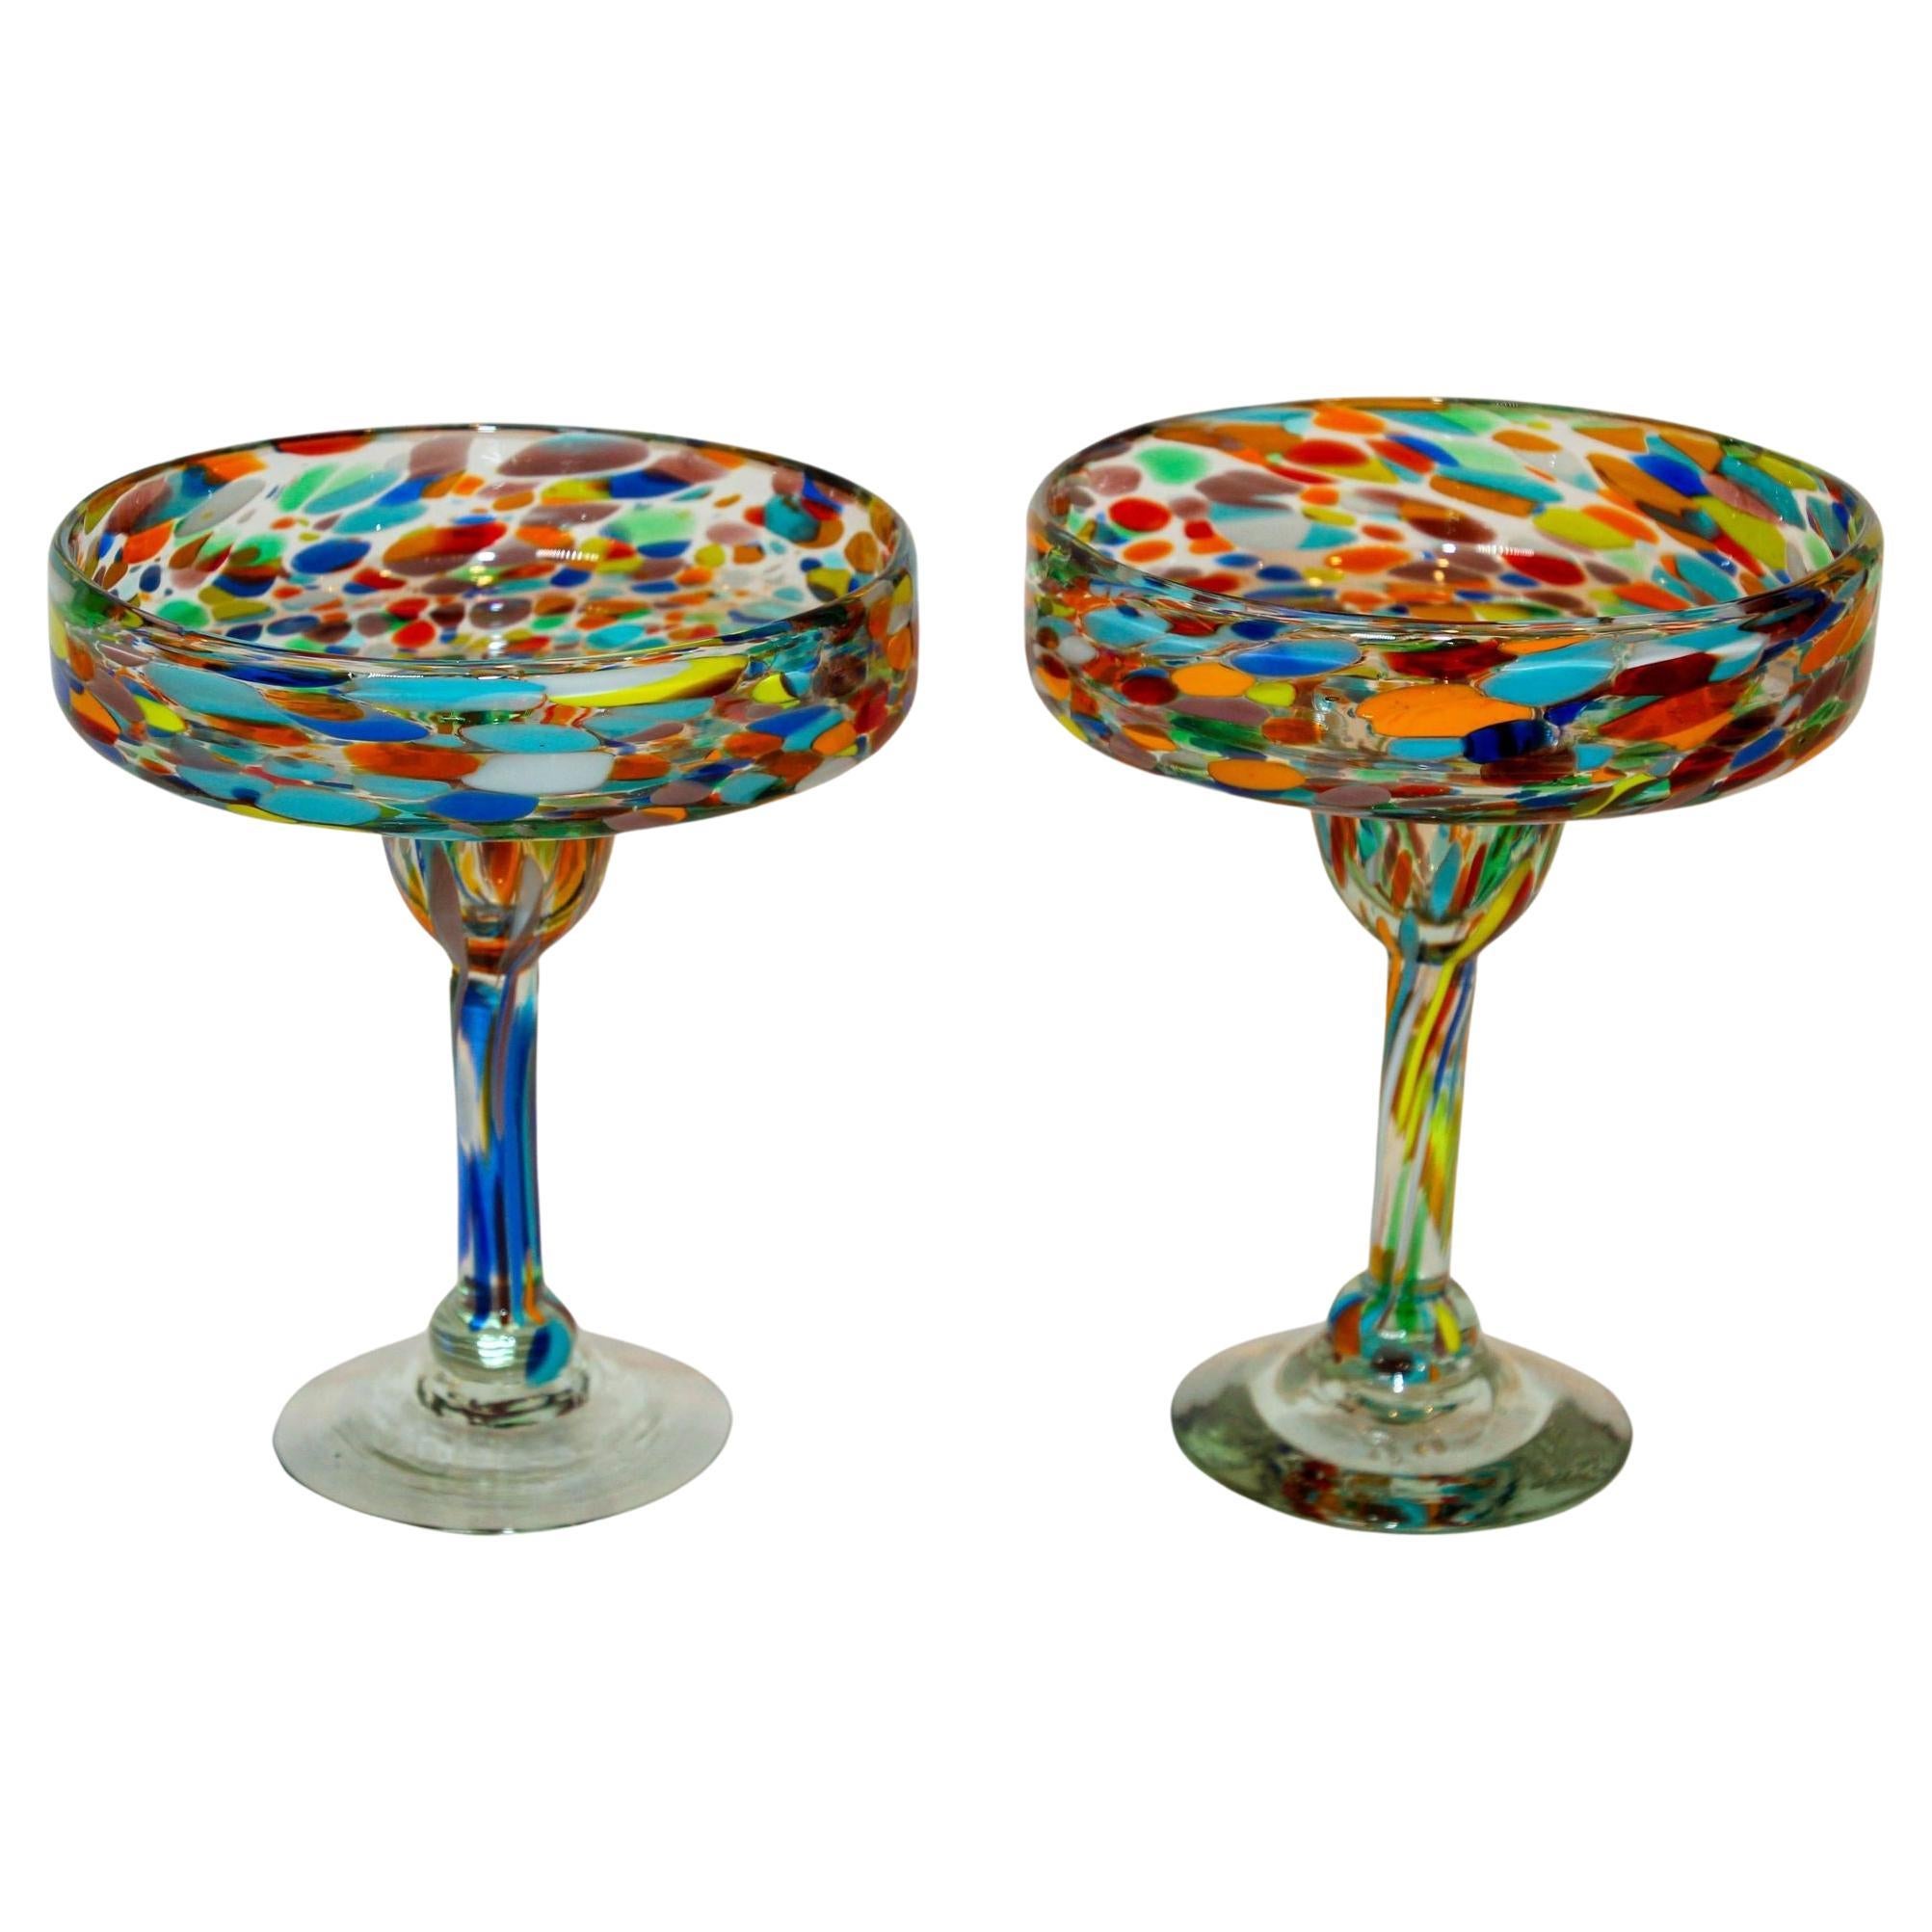 Twine Primavera Recycled Margarita Glass, Set of 2